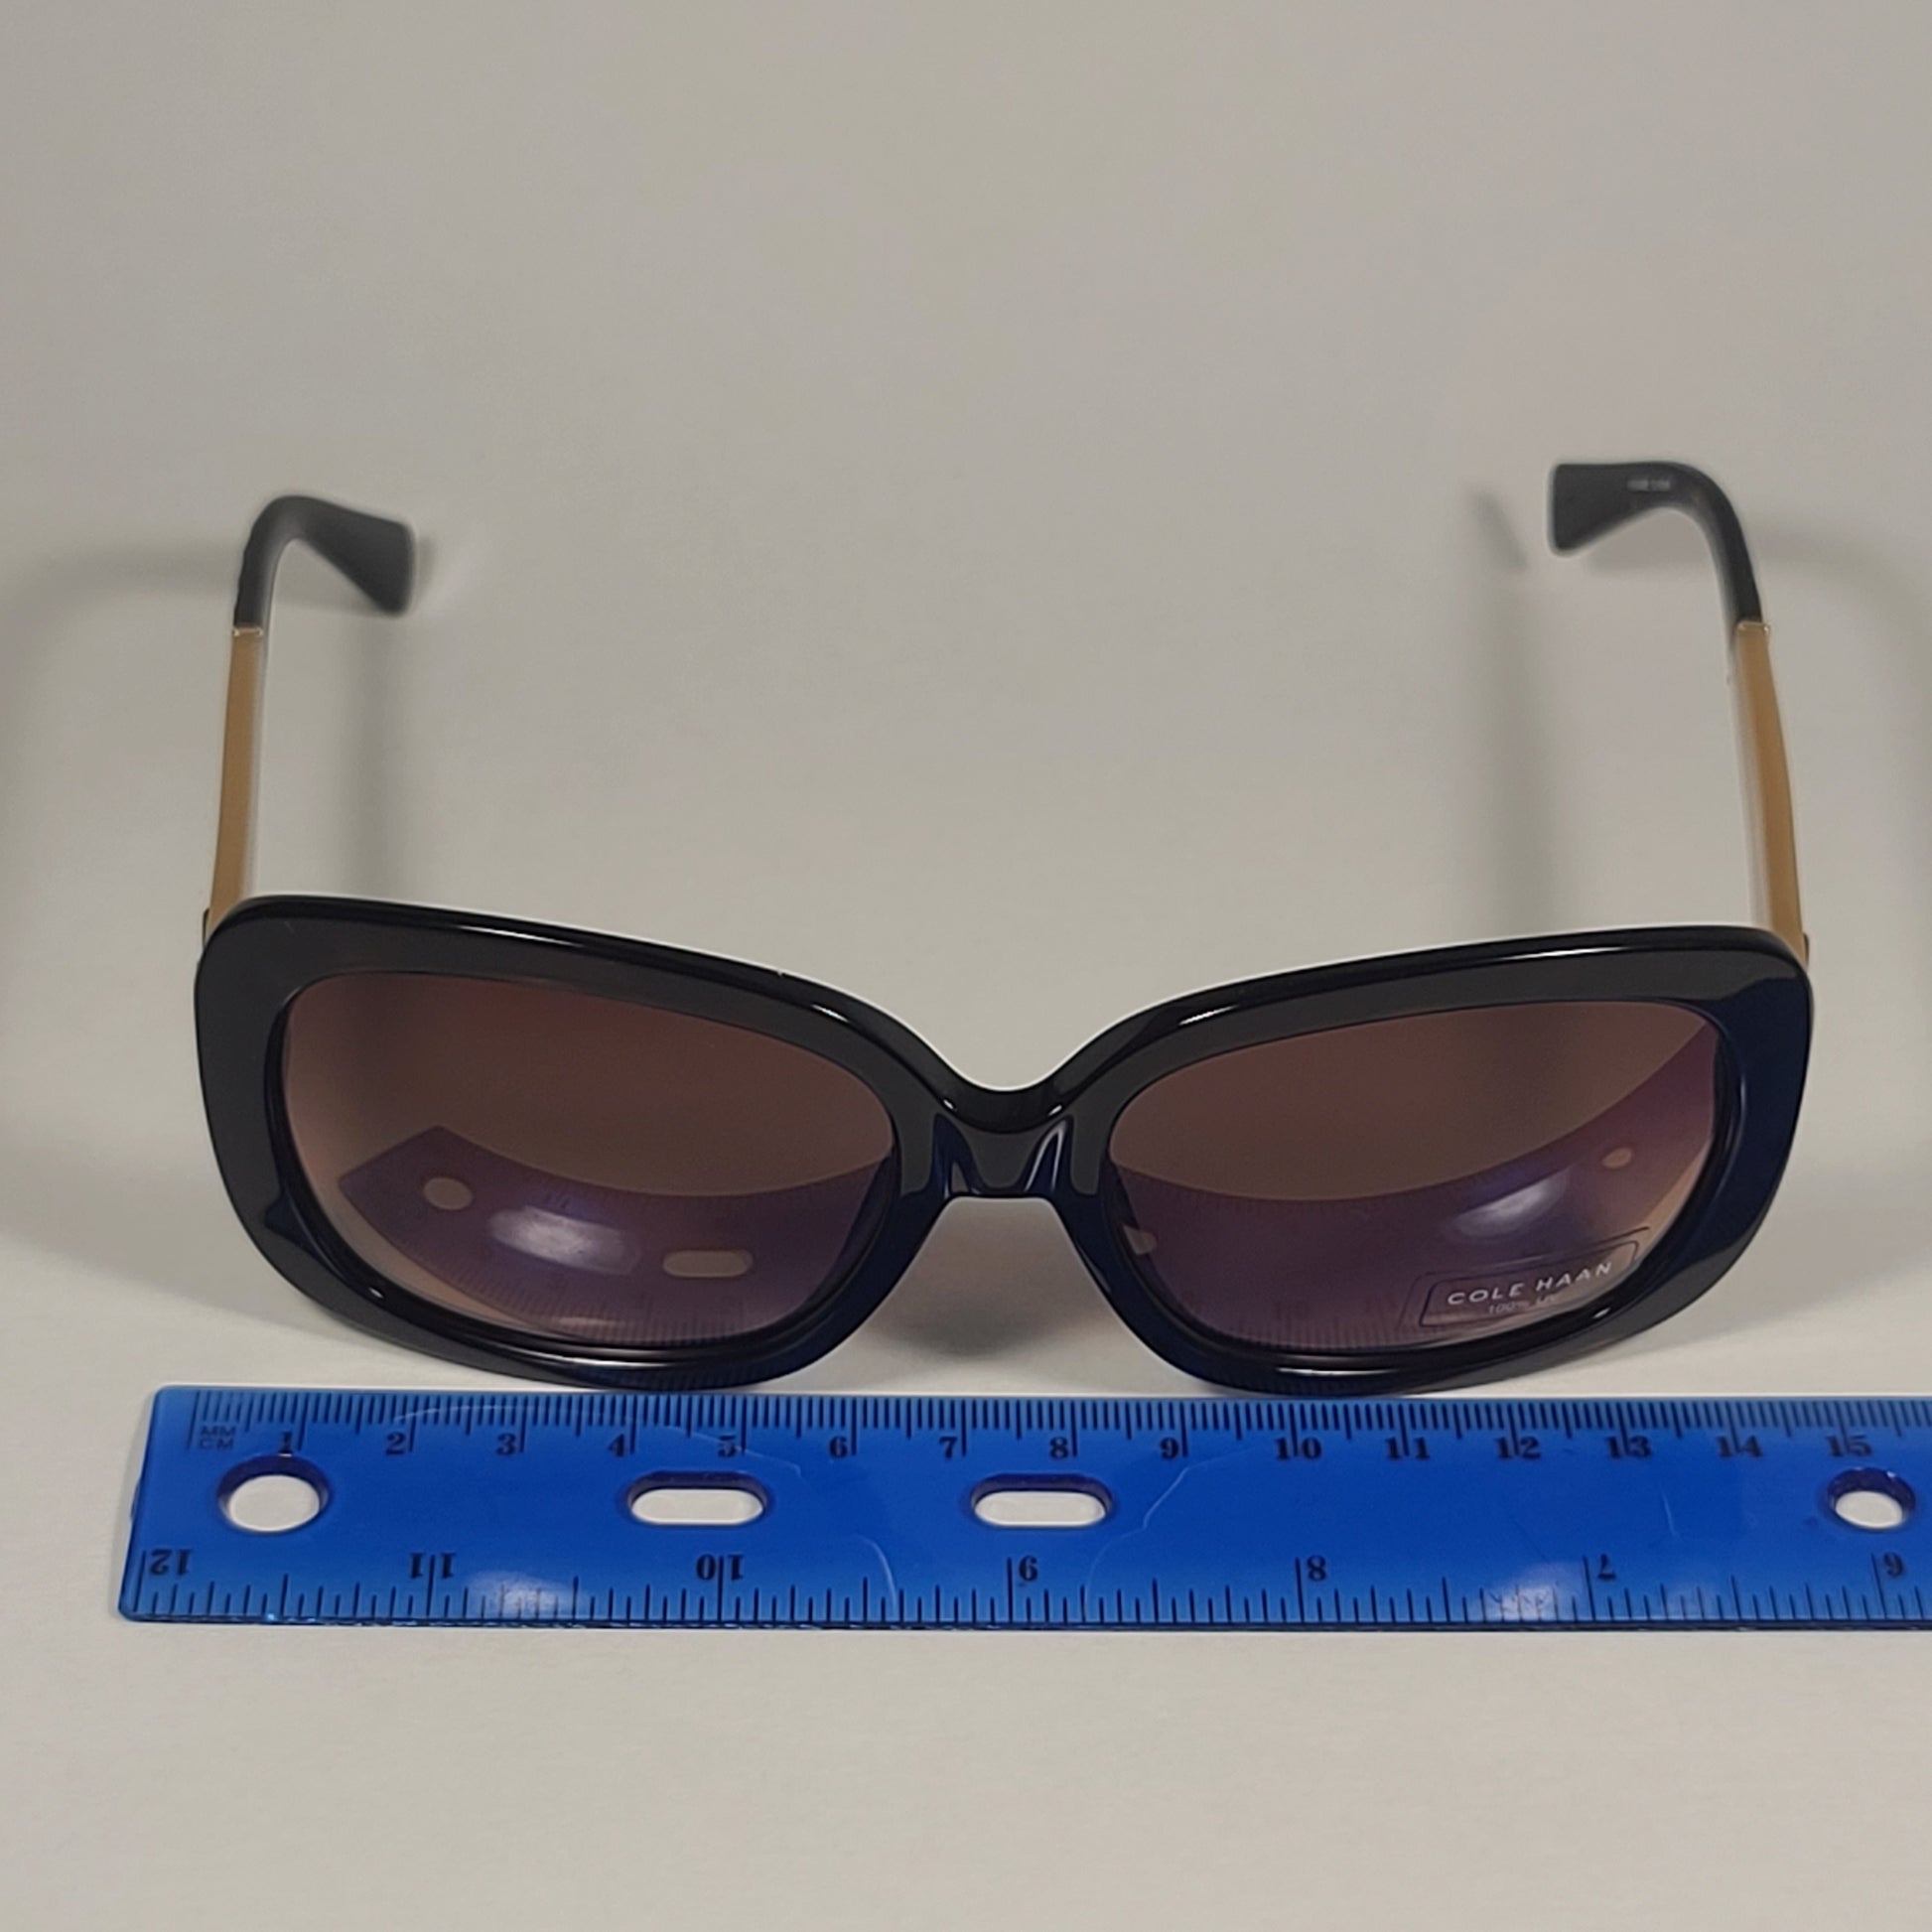 Cole Haan CH7003 237 DARK TORTOISE Oval Sunglasses Dark Tortoise Frame Brown Gradient Lens - Sunglasses